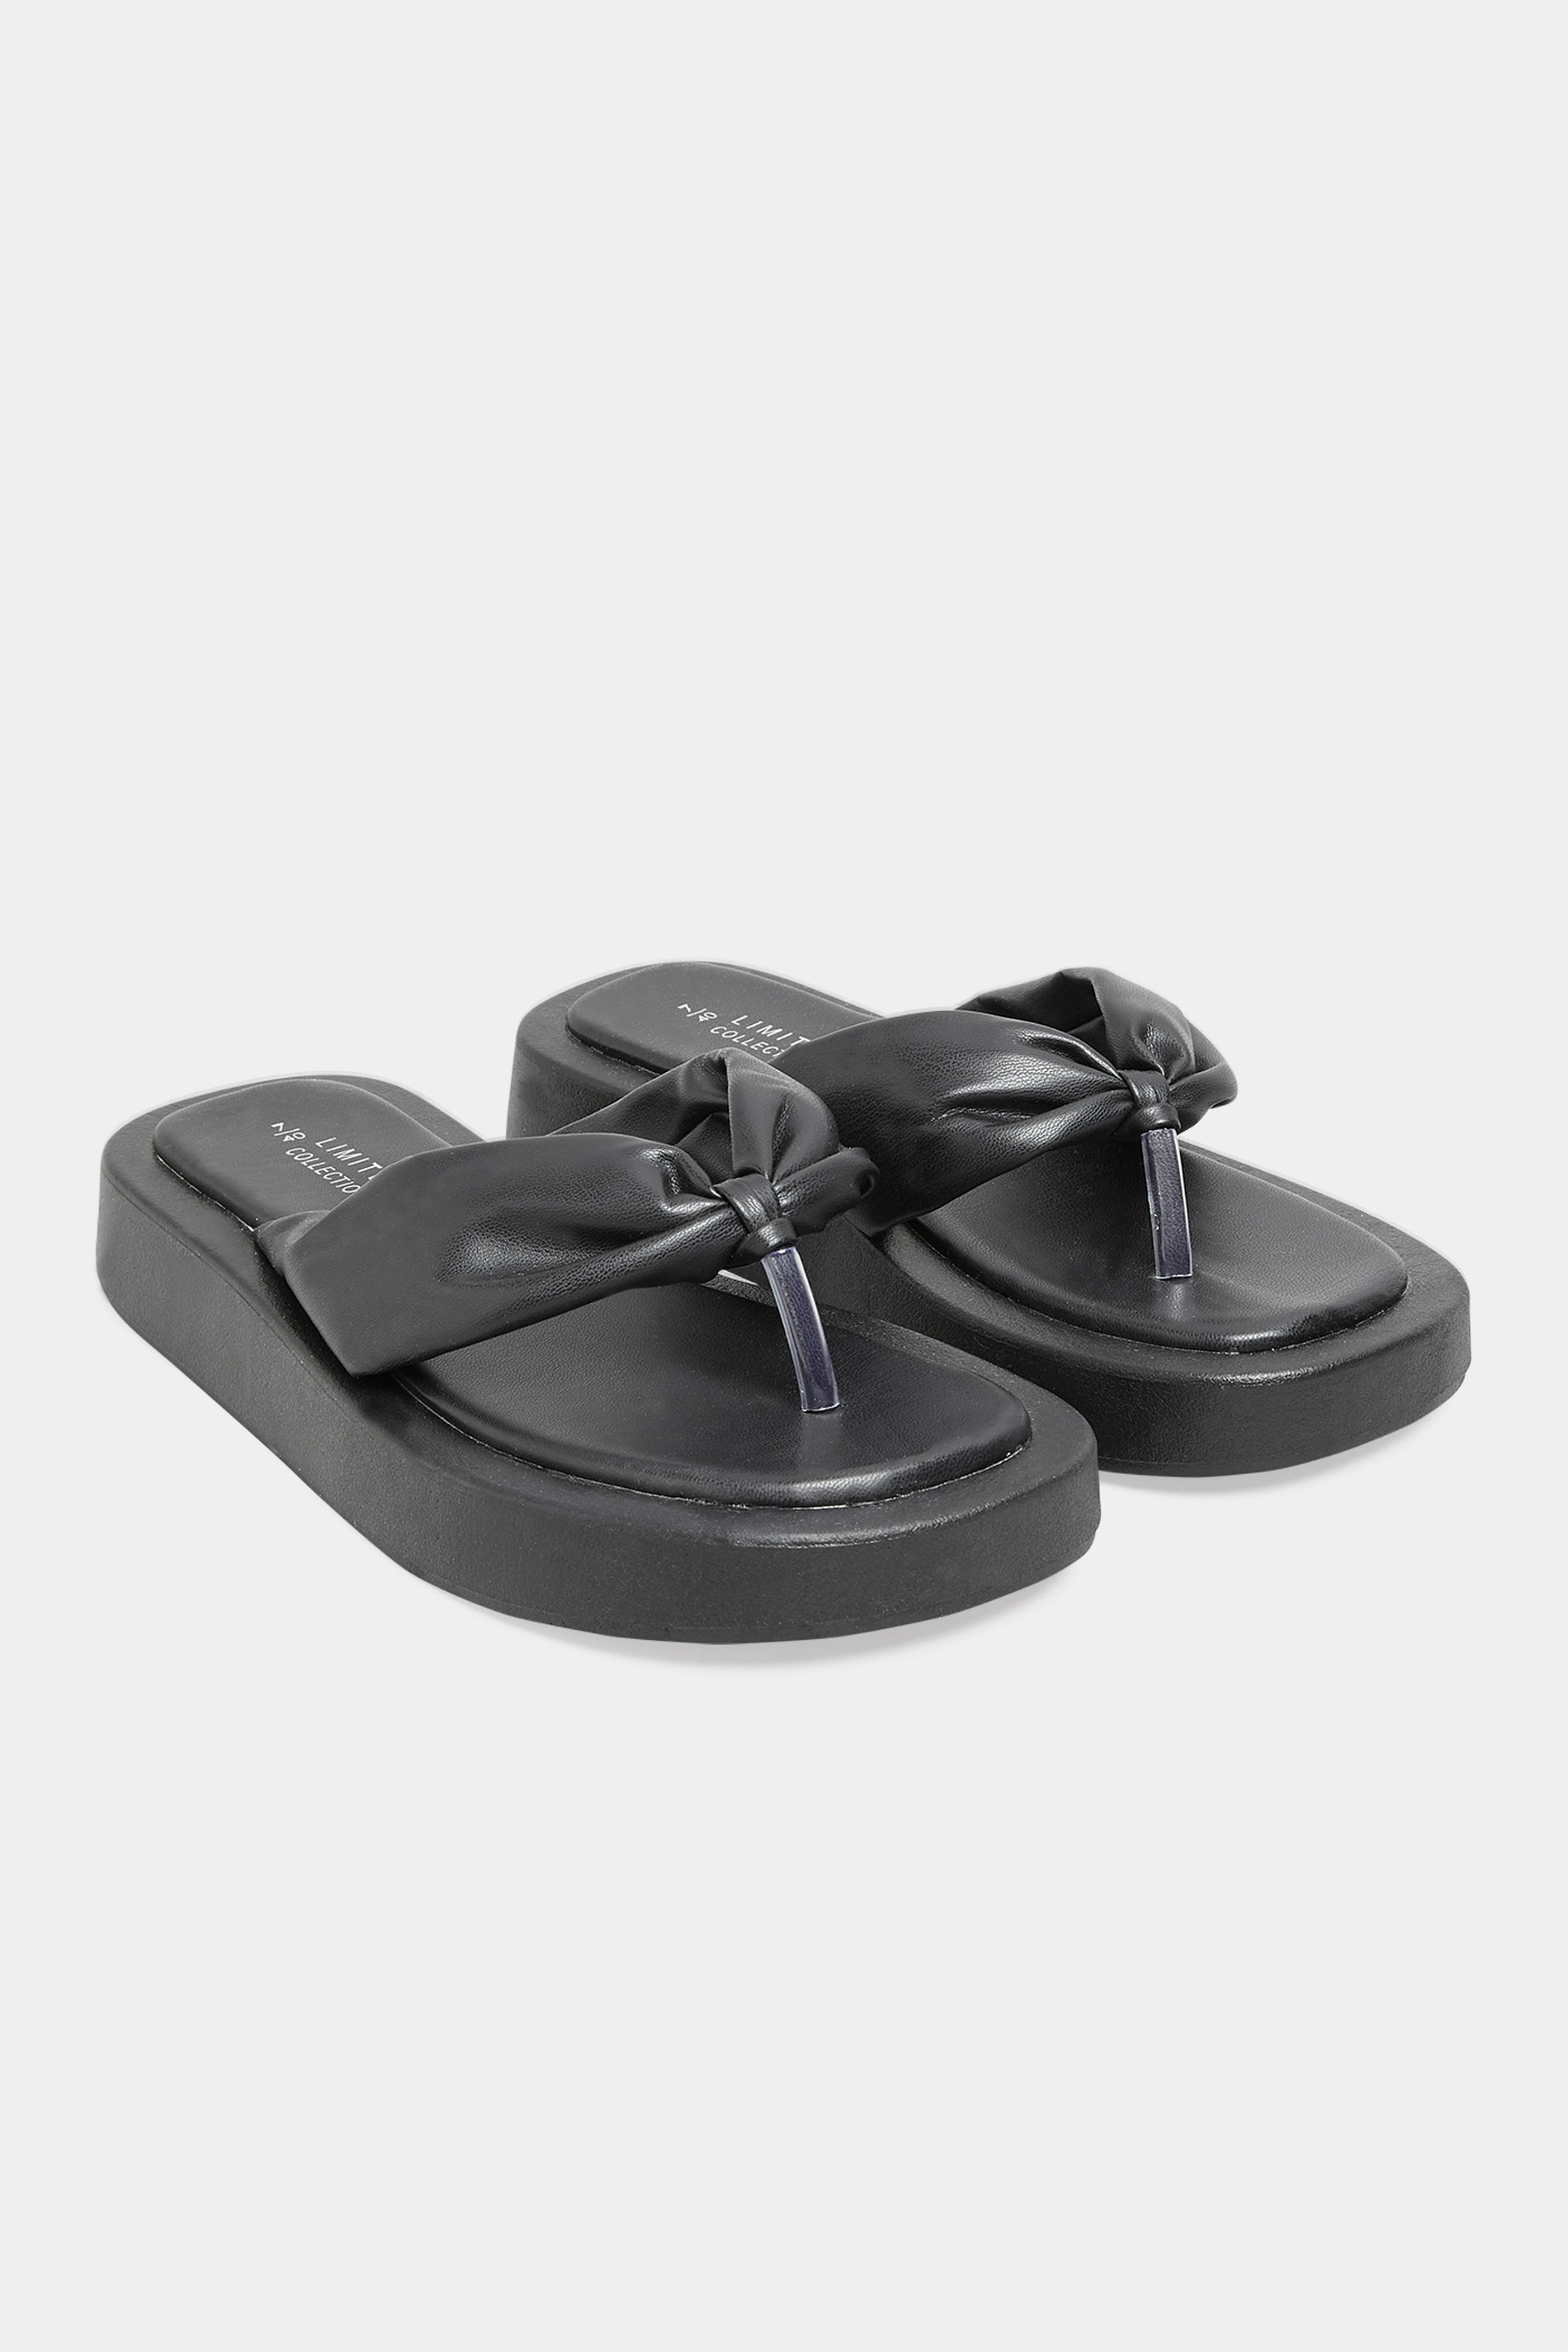 LIMITED COLLECTION Black Flatform Sandals In Wide EE Fit_A.jpg